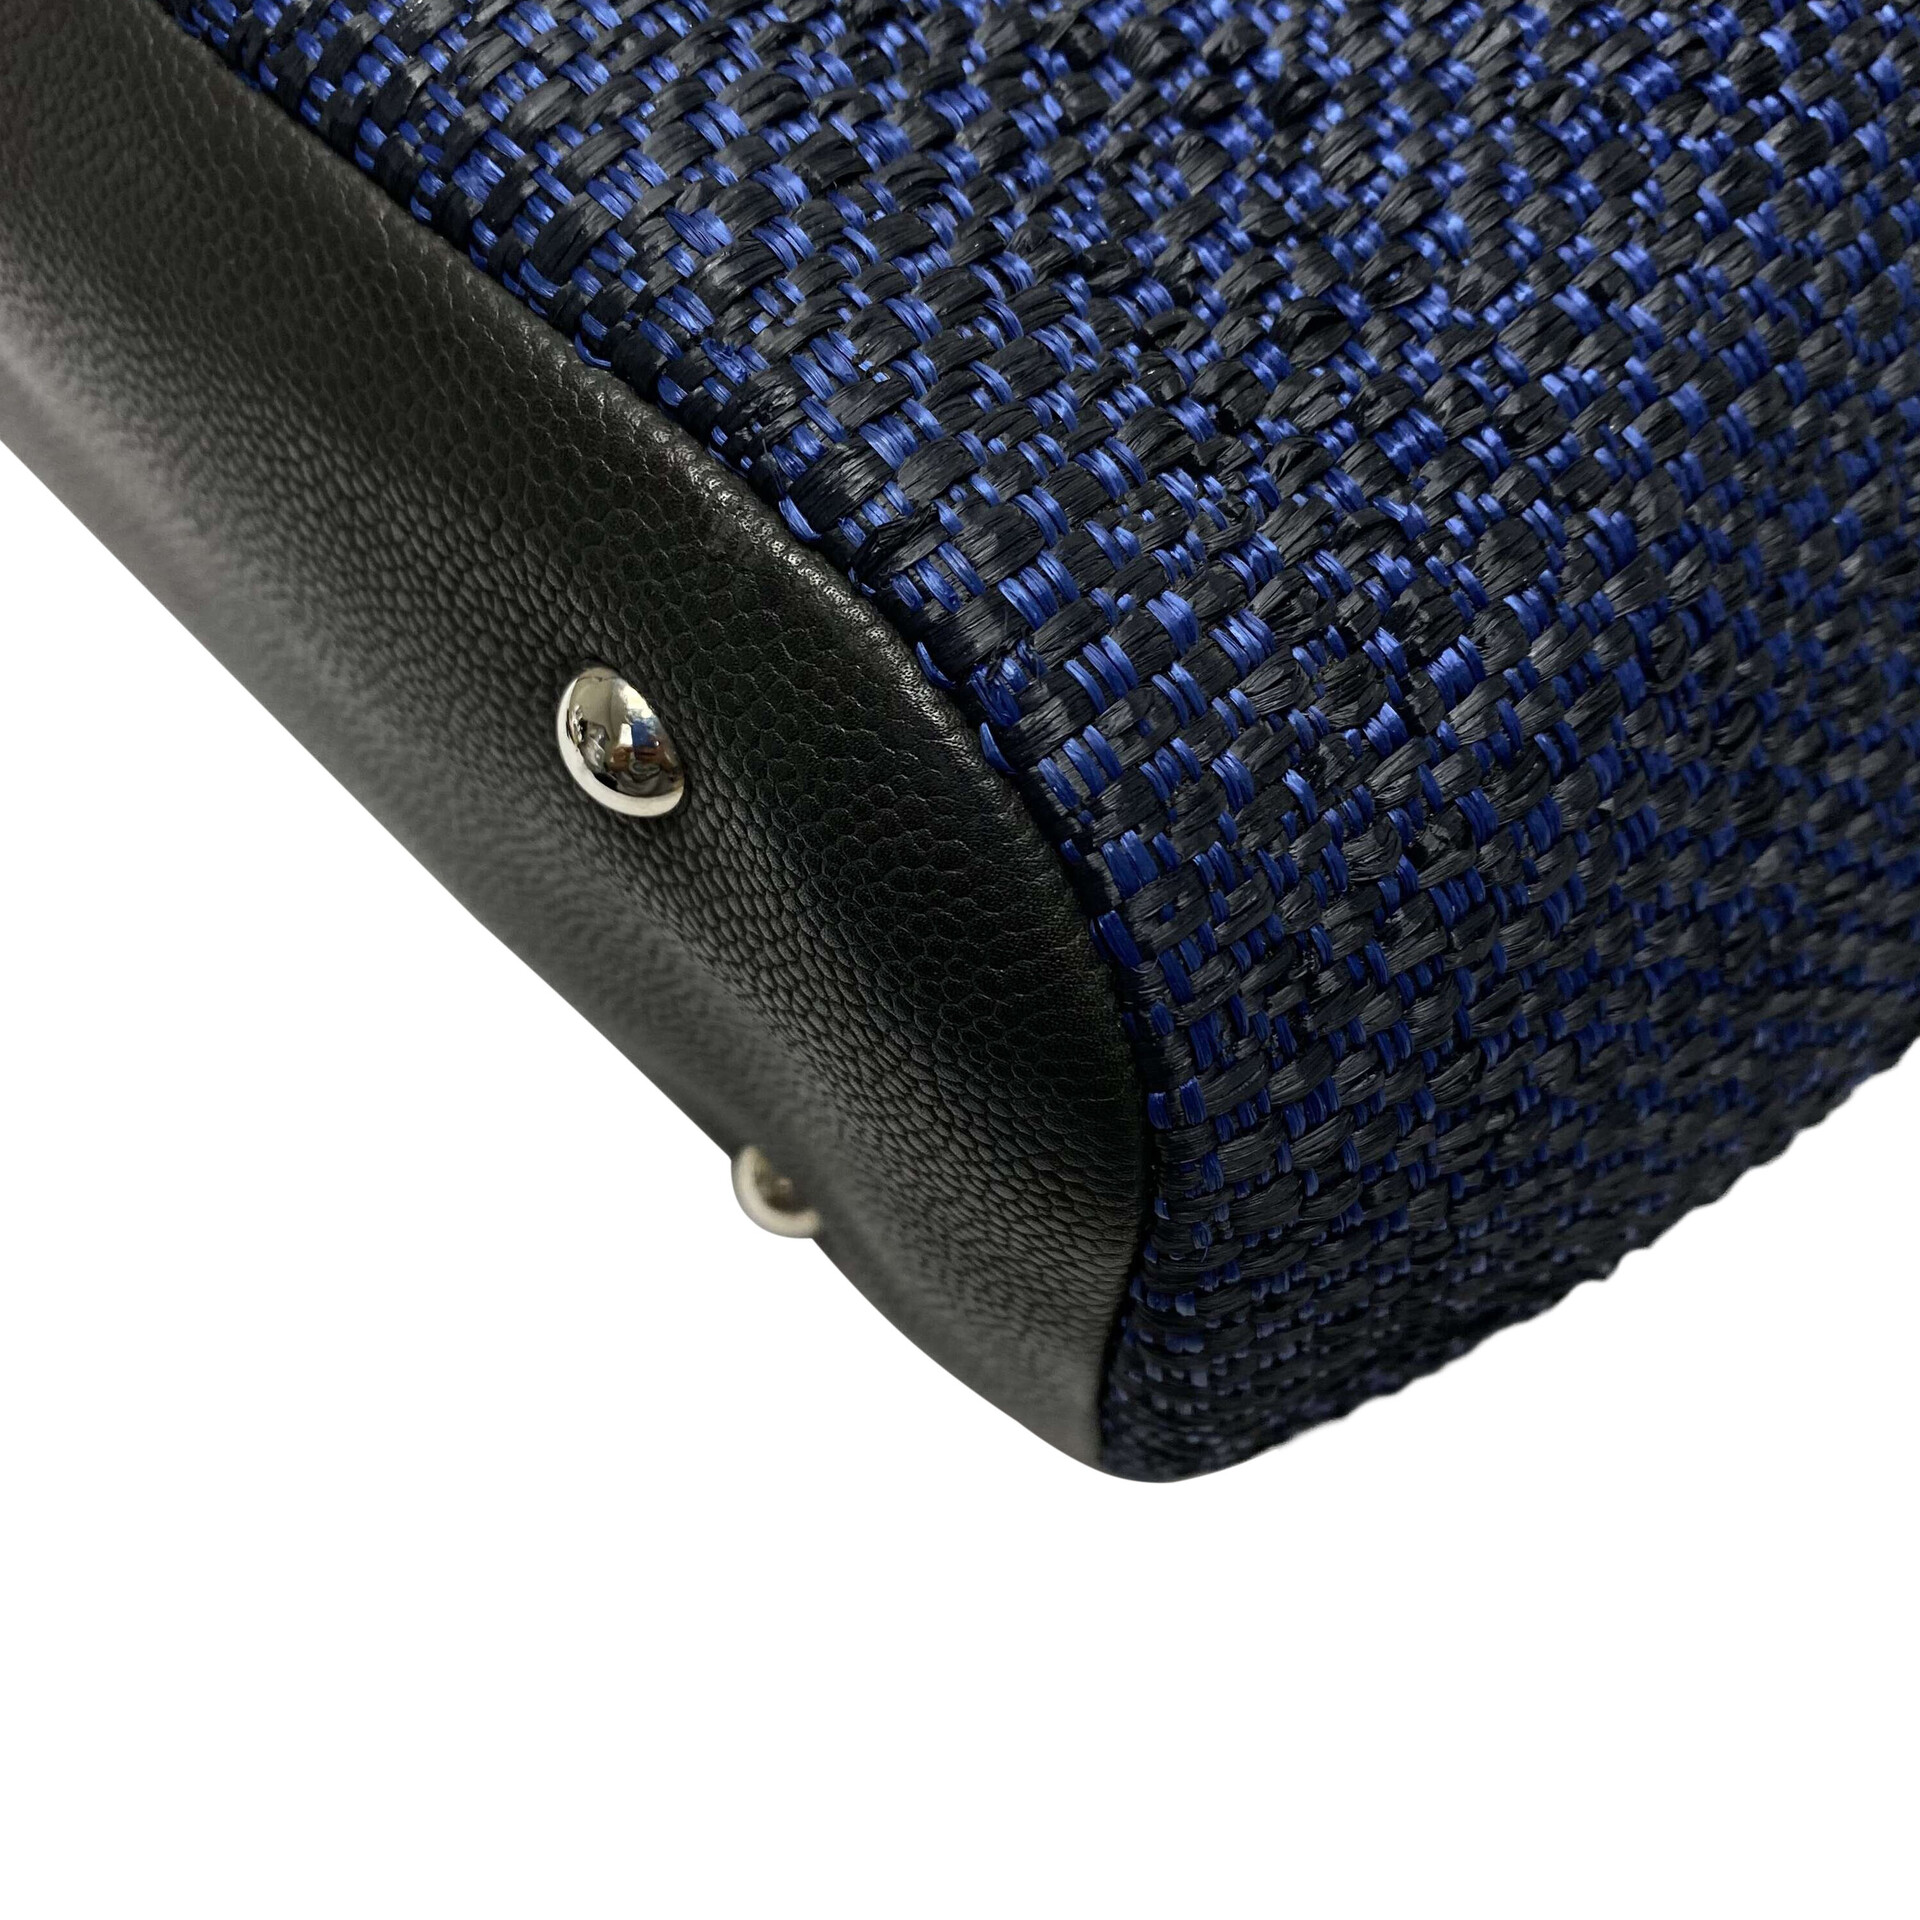 Bolsa Chanel Ráfia Azul